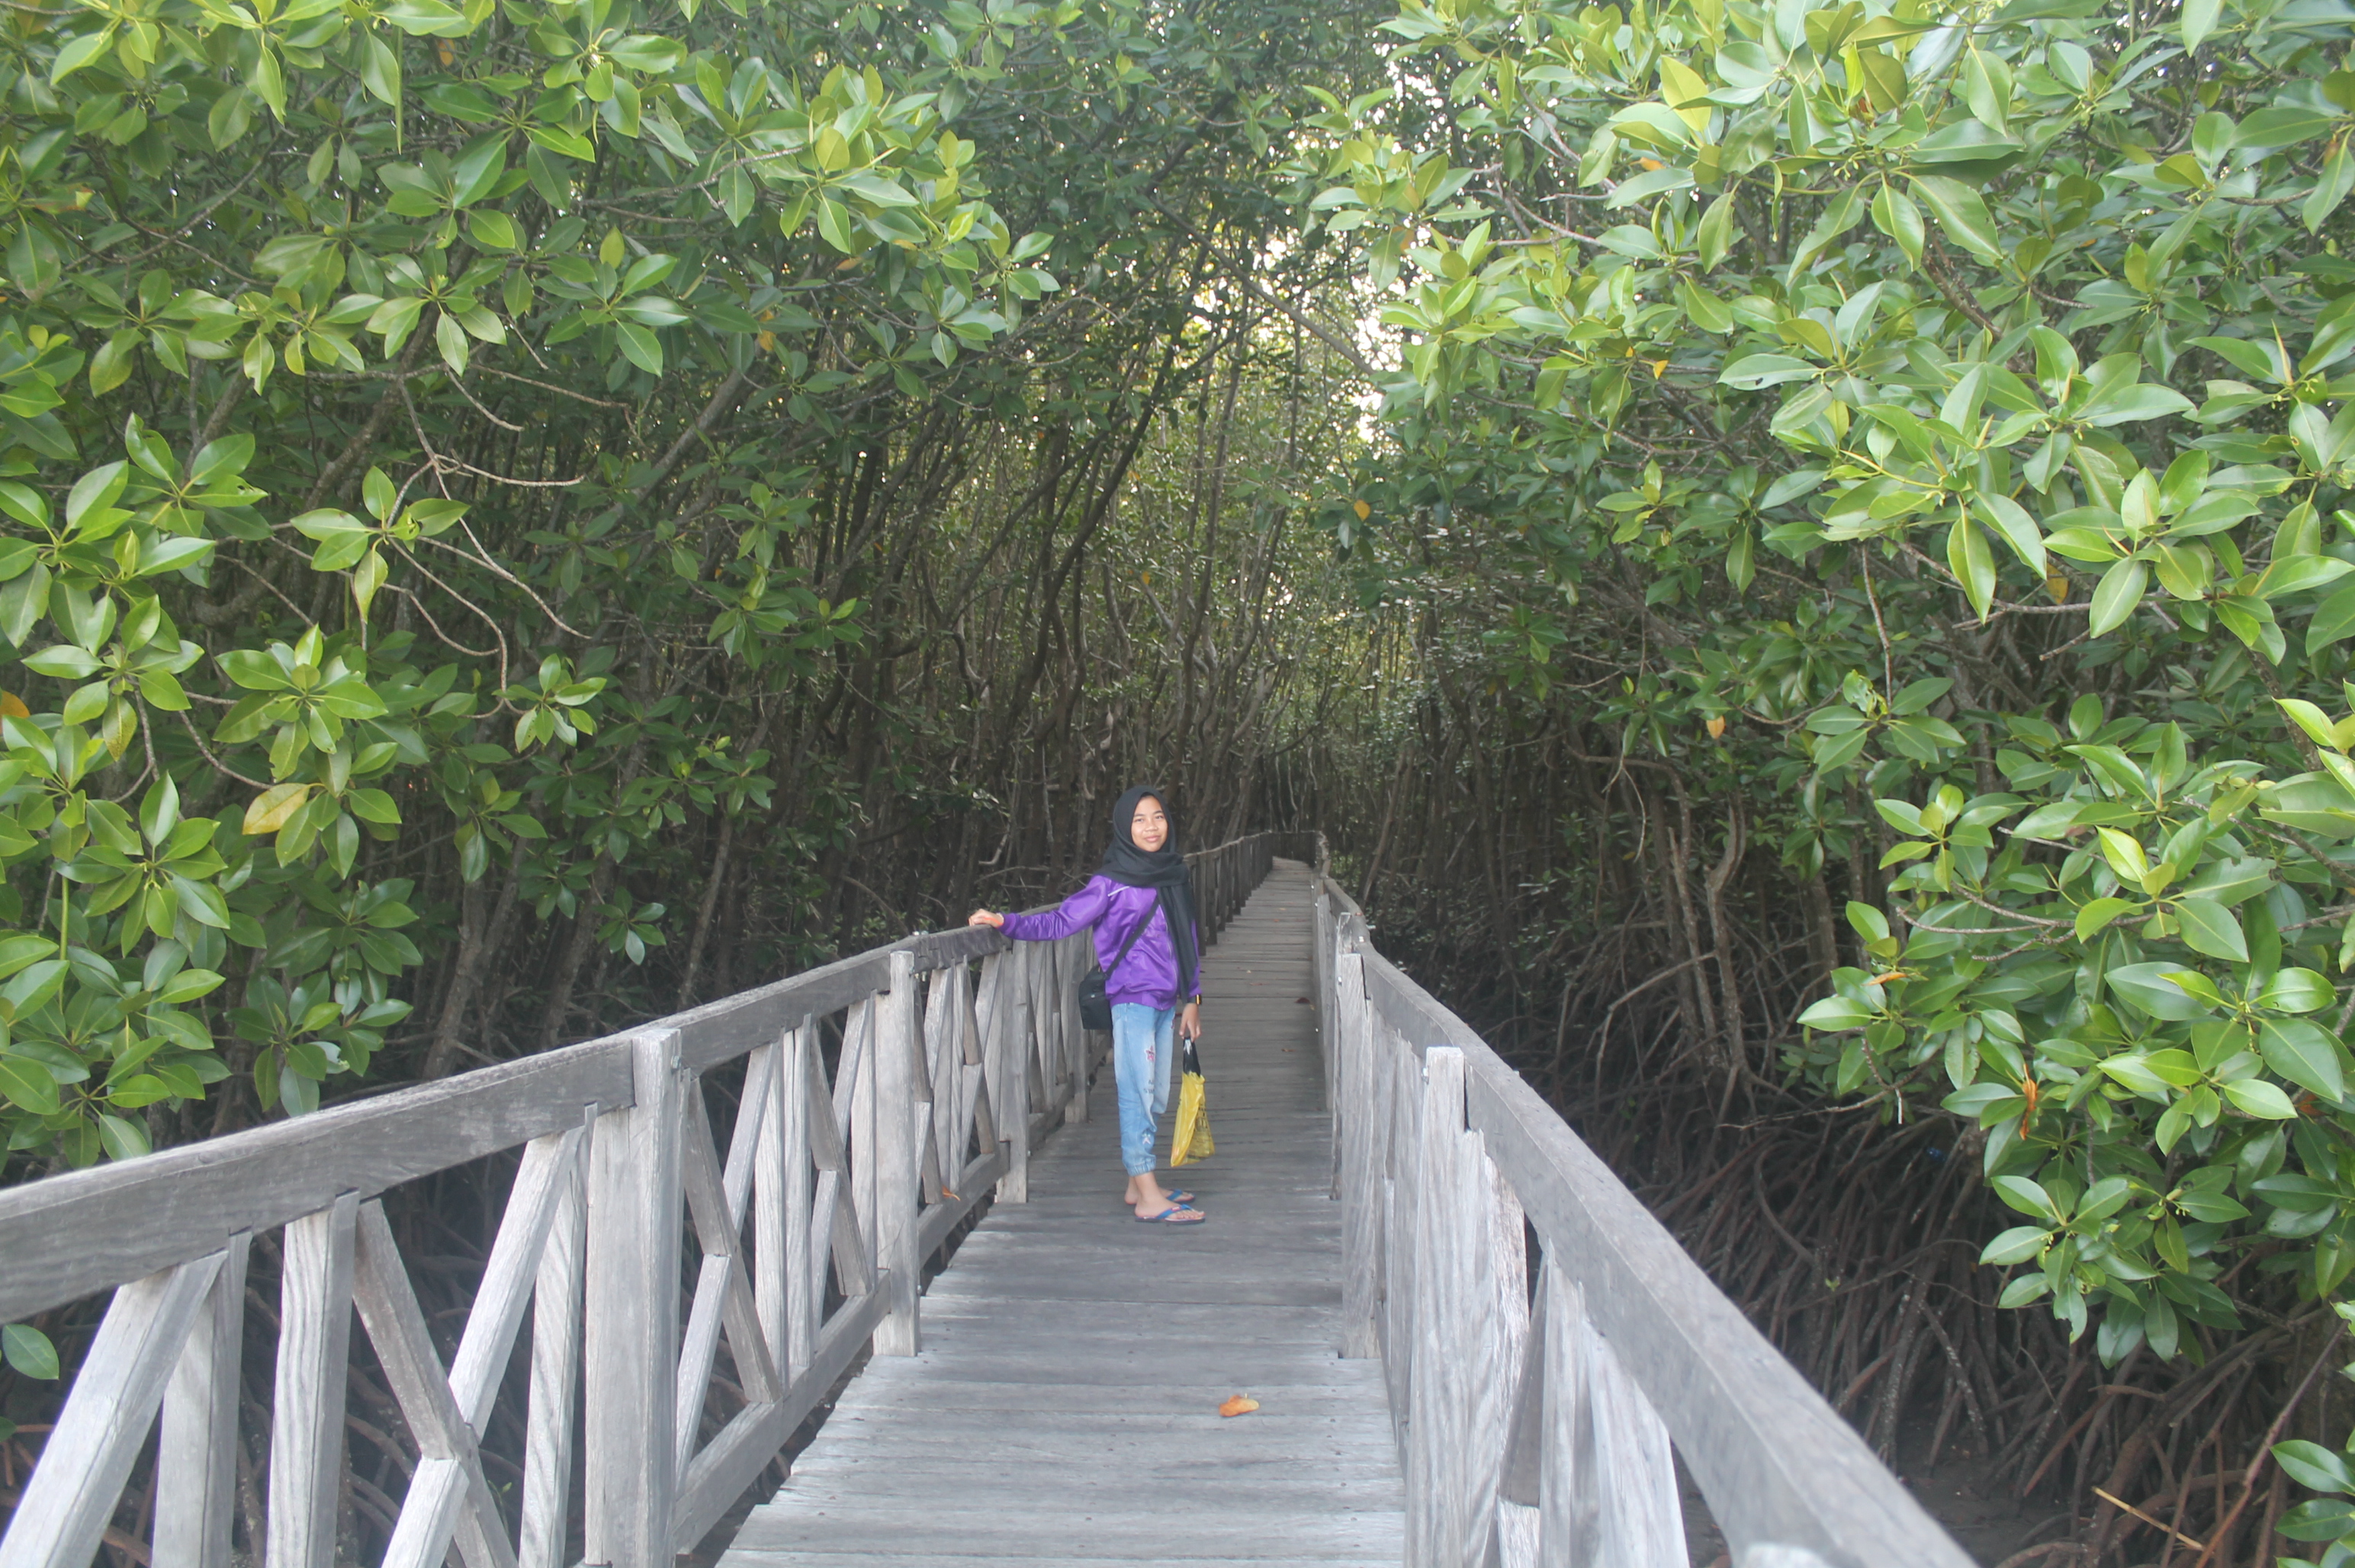 Hutan mangrove di Desa Tongke-tongke, kabupaten Sinjai, Sulawesi Selatan. Selain berfungsi ekologis, hutan mangrove Tongke-tonke jadi obyek wisata unggulan di Sinjai | Foto: Suriani Mappong/Mongabay Indonesia